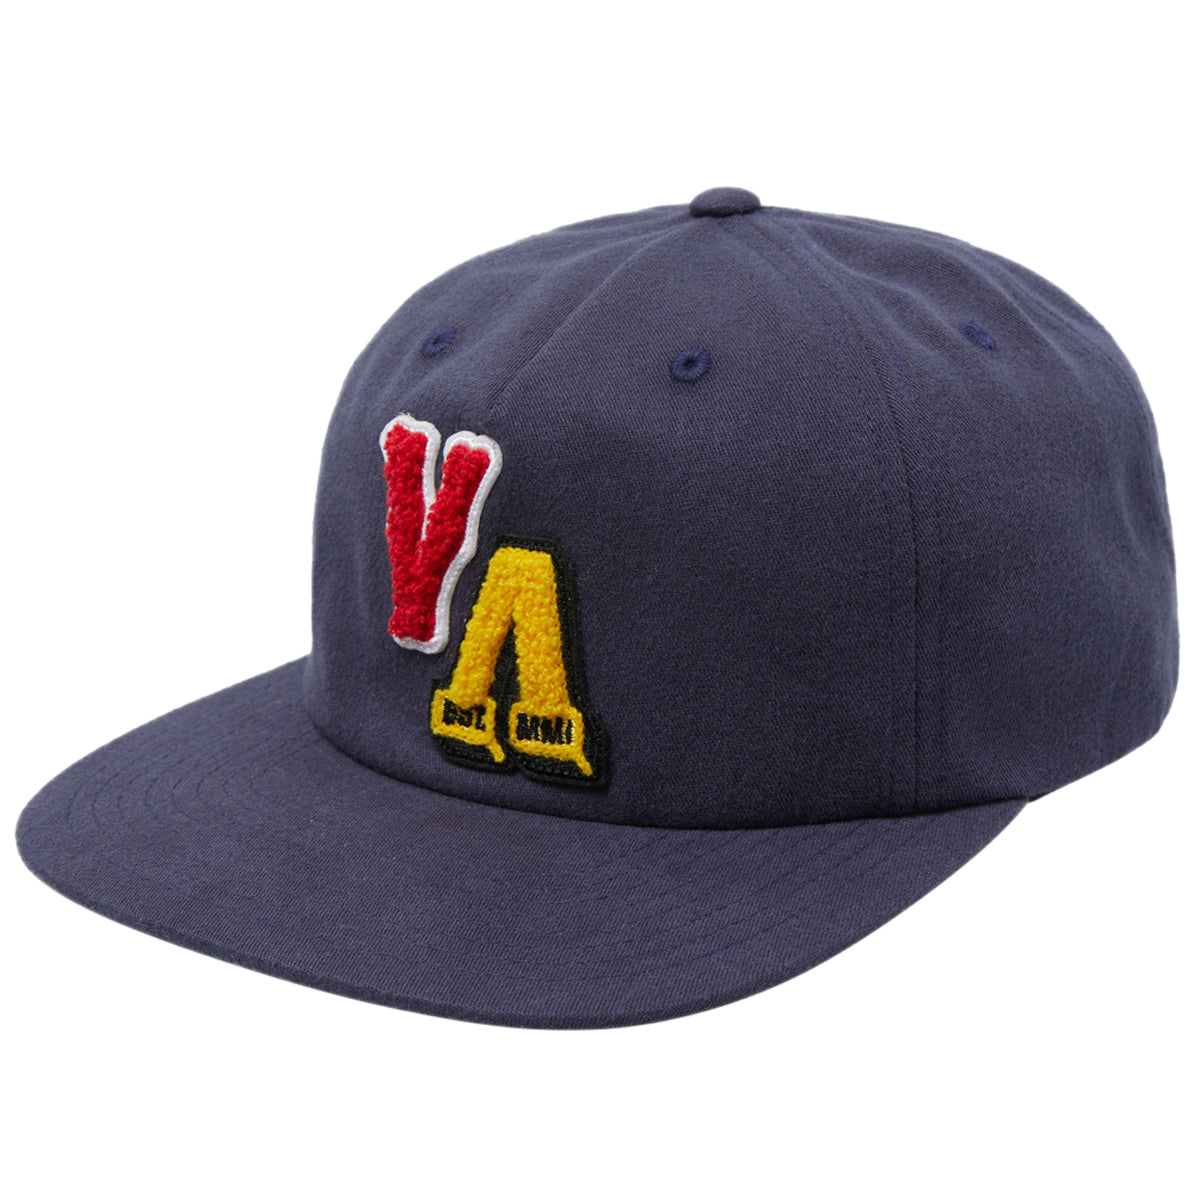 RVCA Letterman Snapback Hat - Navy image 1